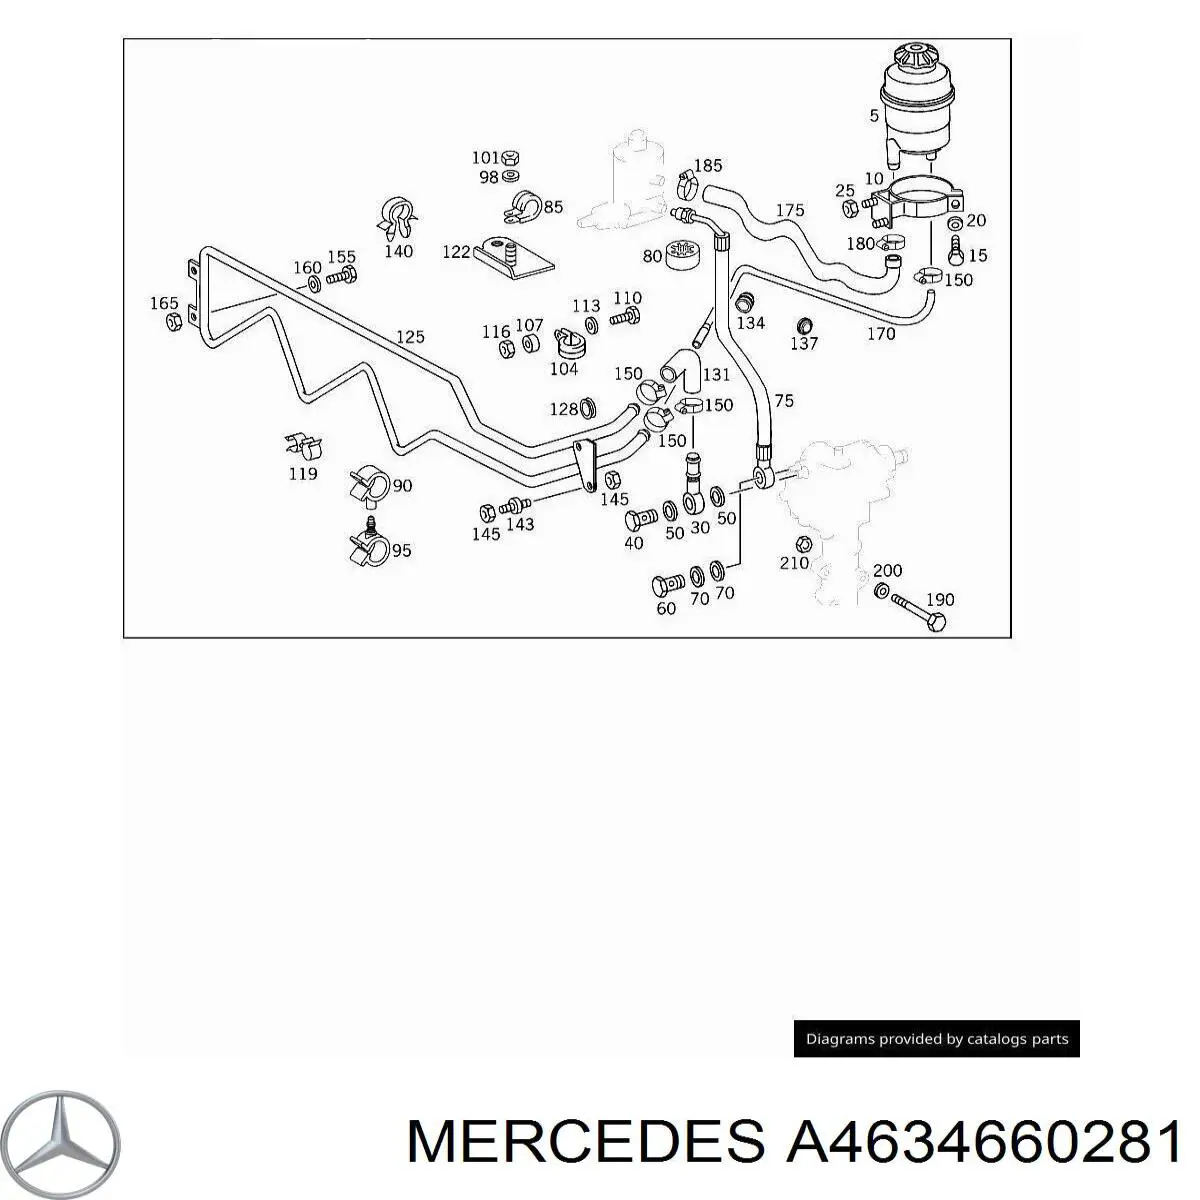 A4634660281 Mercedes